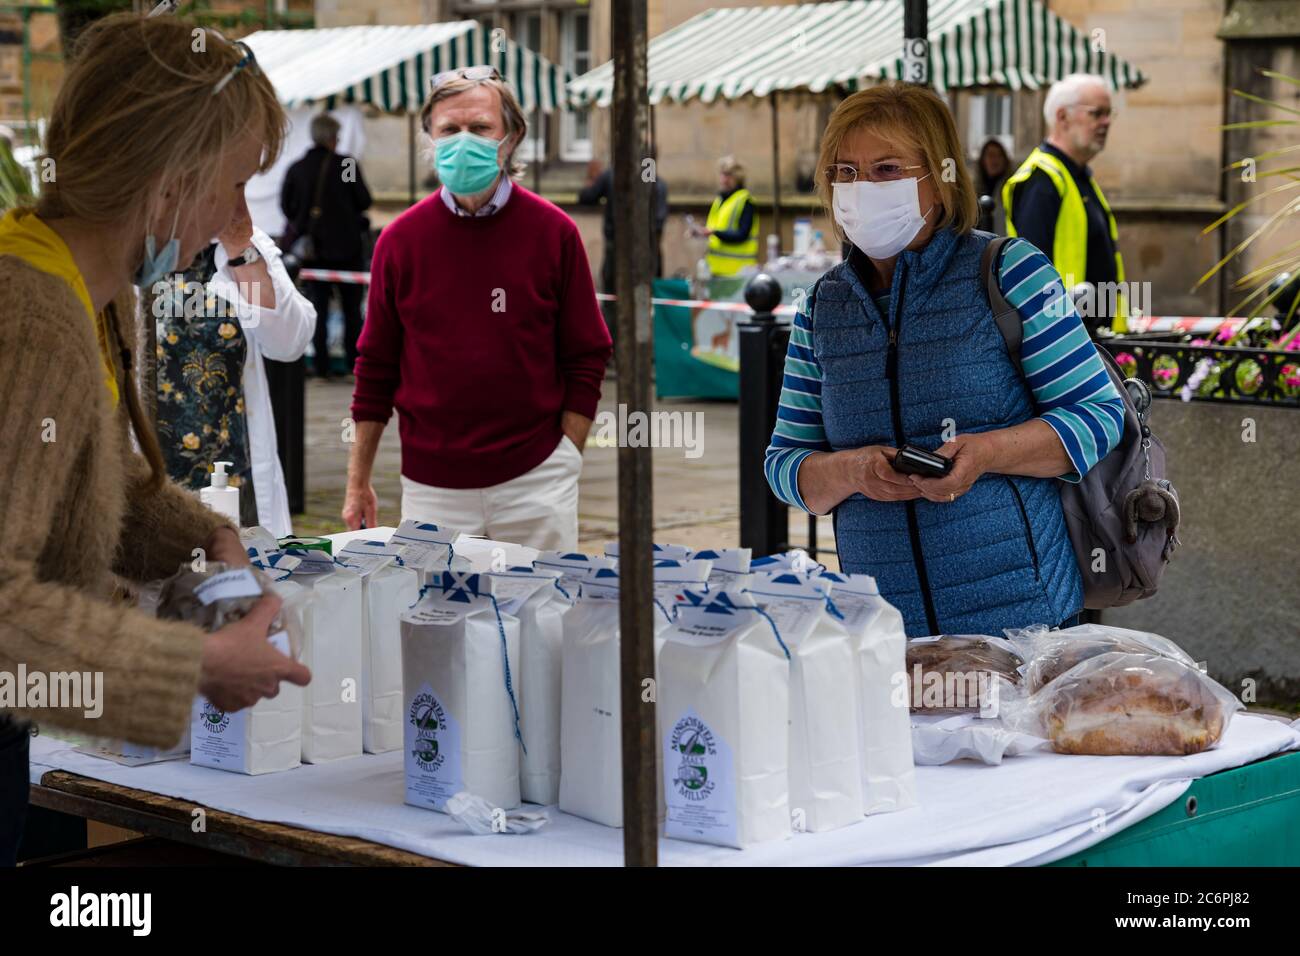 Customers wearing face masks at Farmers Market a Mungoswells flour stall during Covid-19 pandemic, Haddington, East Lothian, Scotland, UK Stock Photo